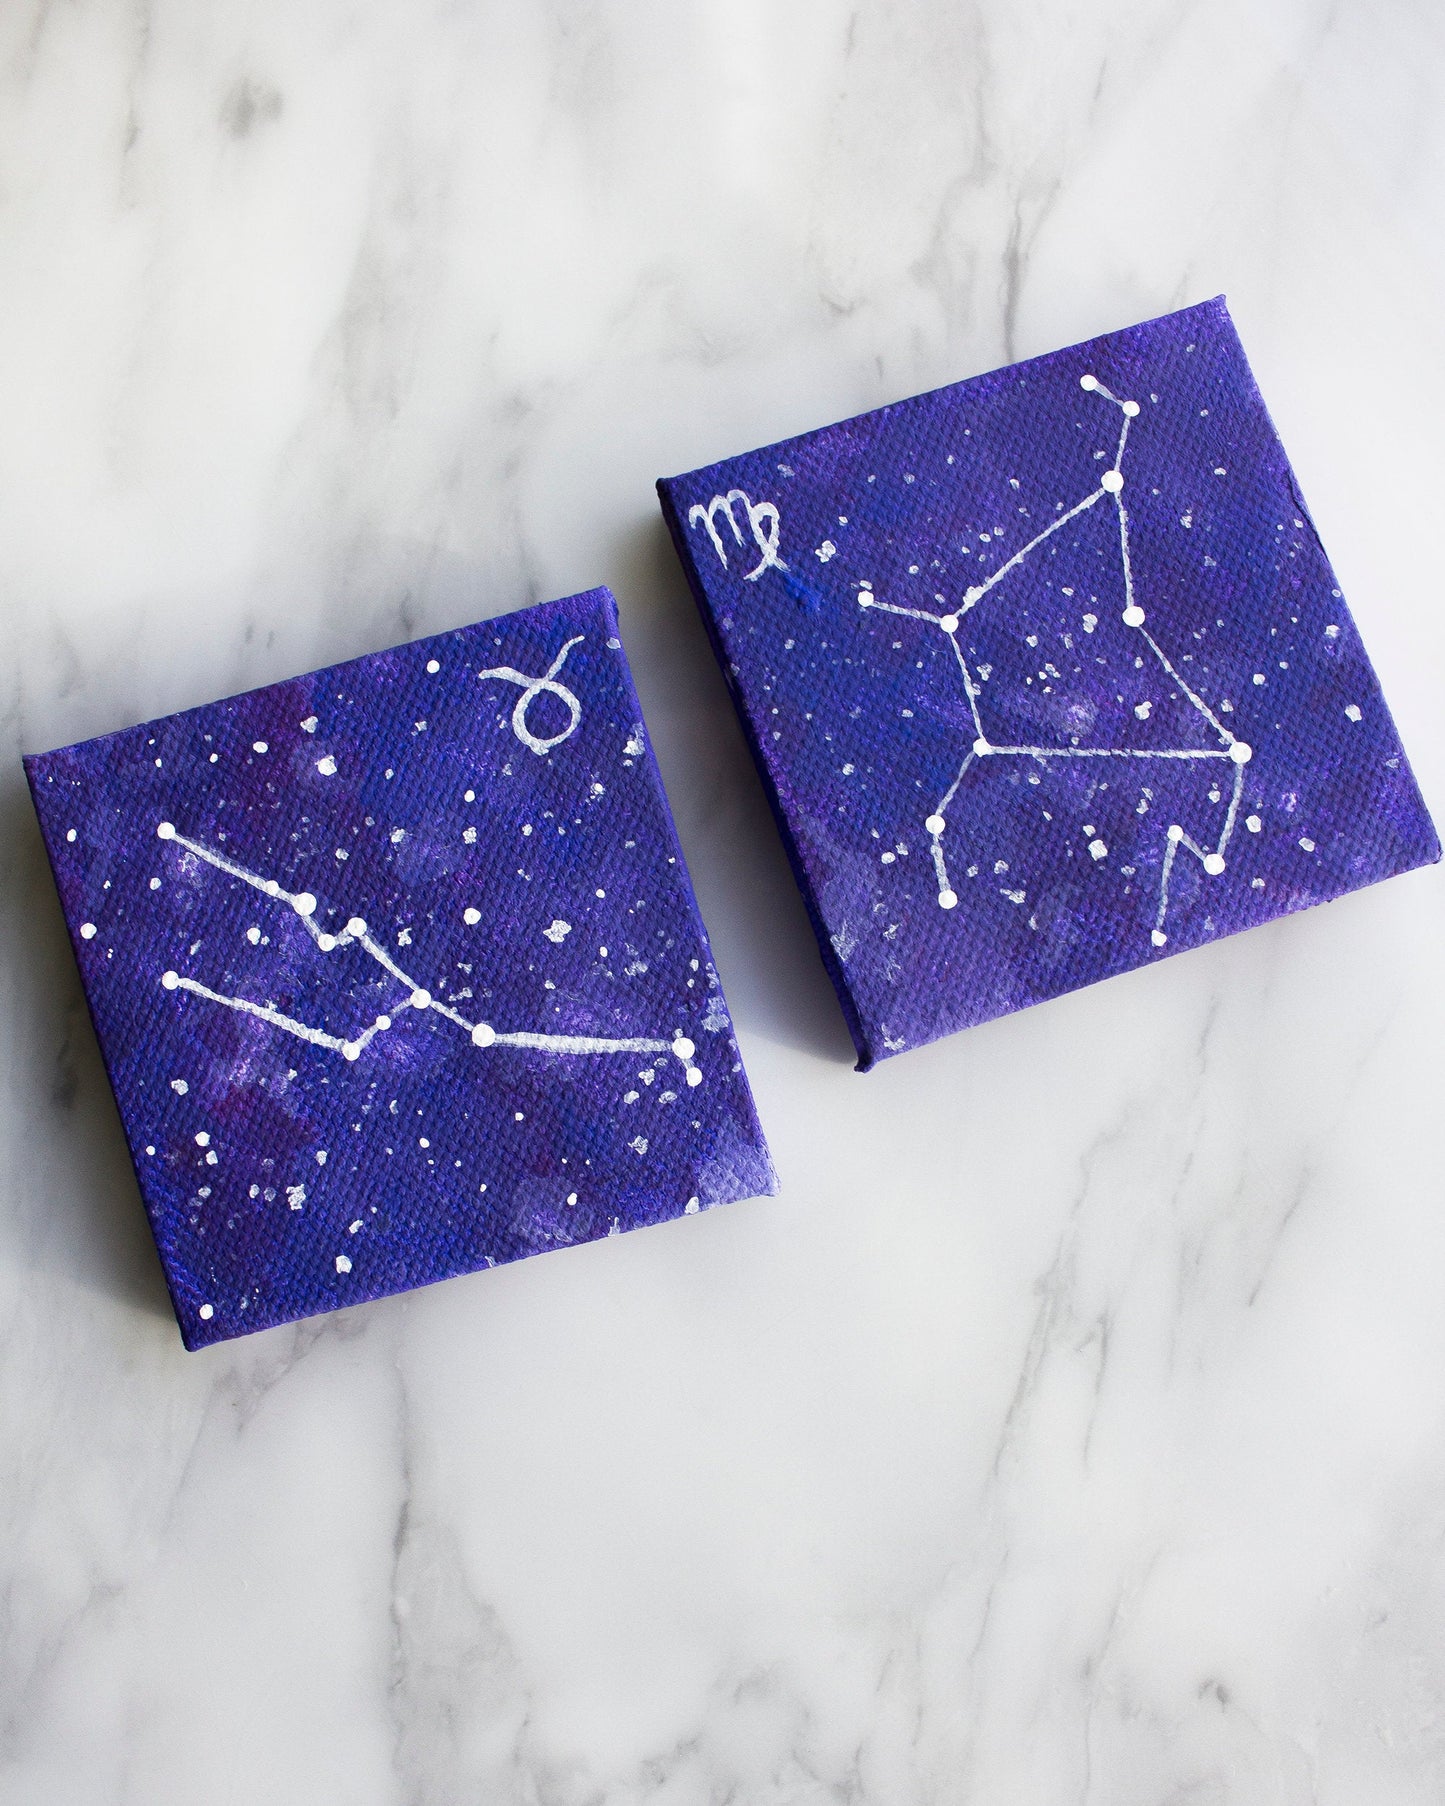 Mini Zodiac Sign Constellation Paintings